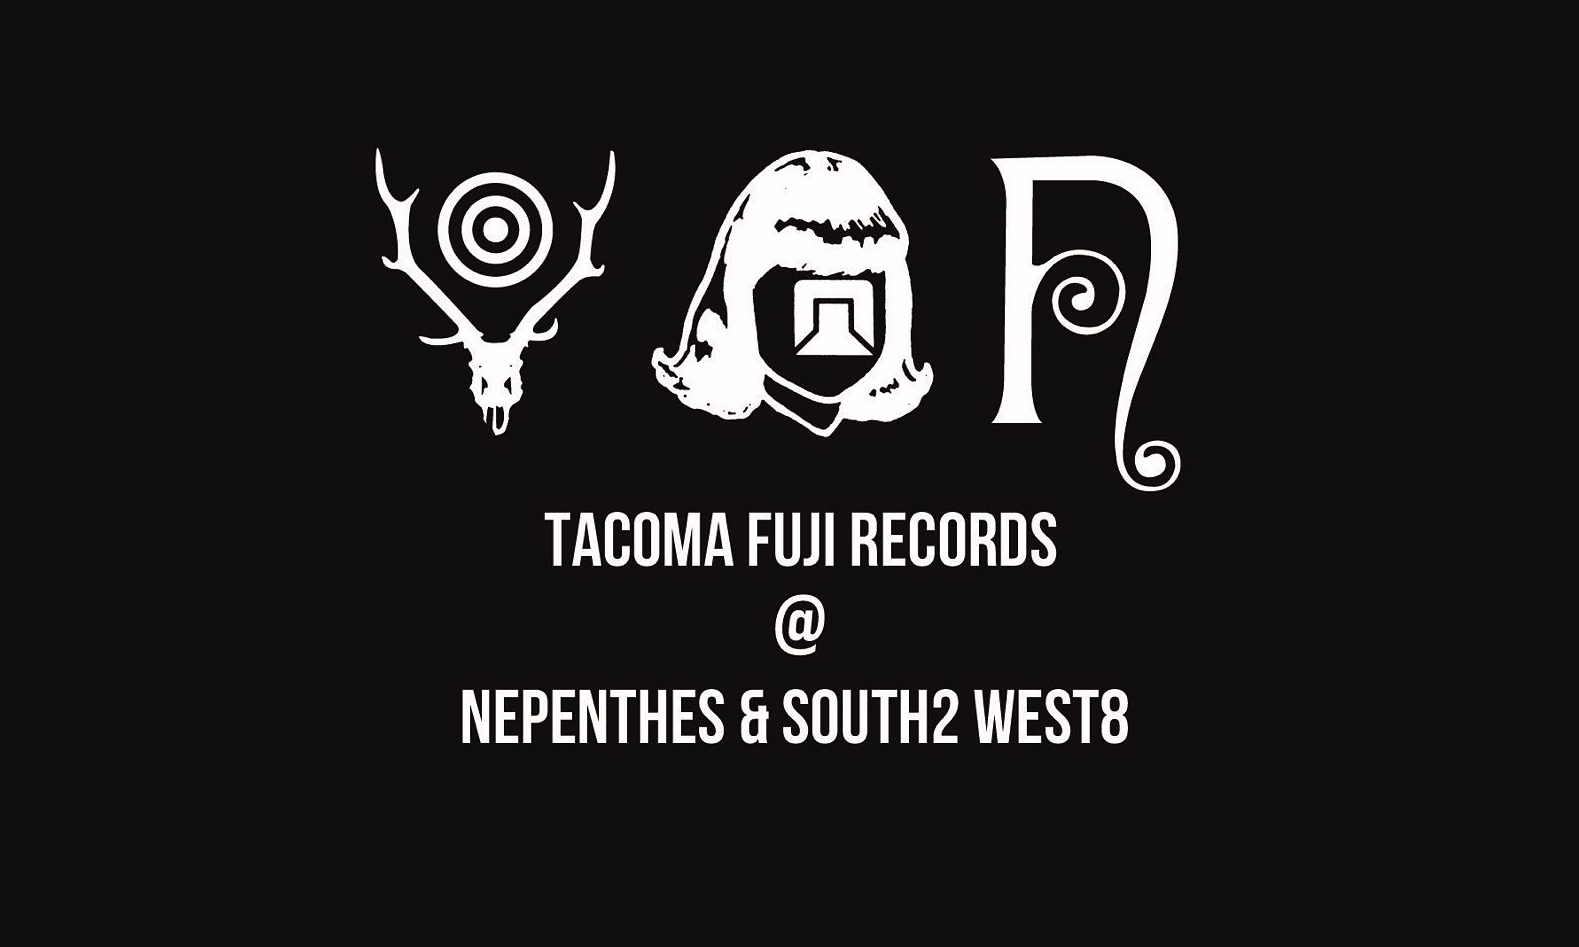 NEPENTHES 联合唱片店 Tacoma Fuji Records 举办巡回 Pop-Up